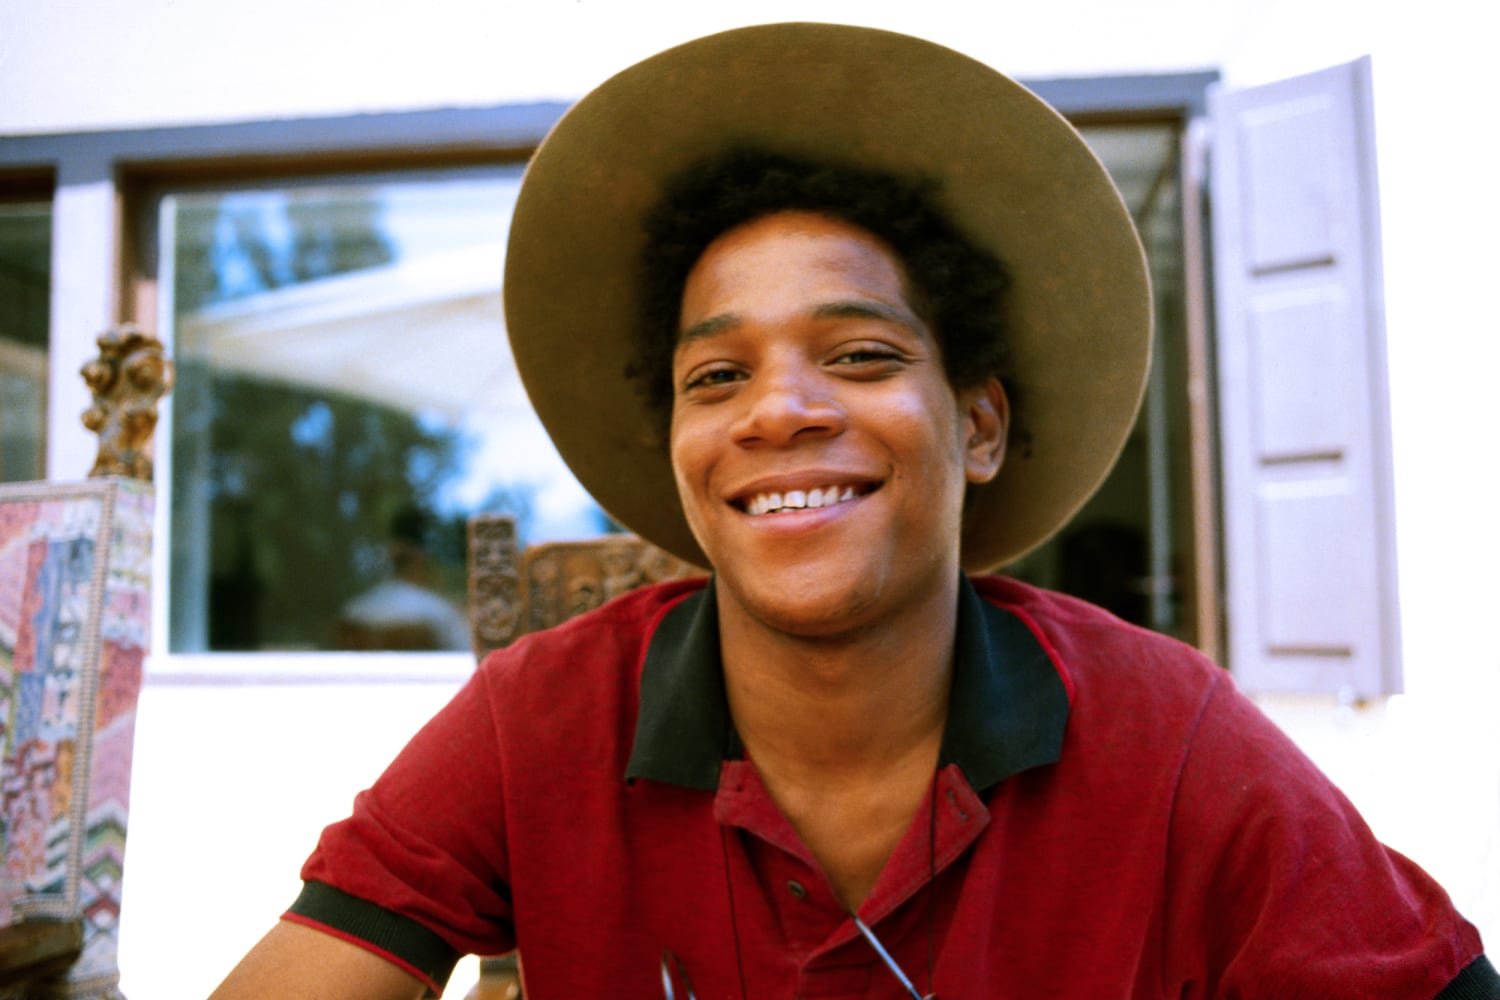 Basquiat jean michel Biography of